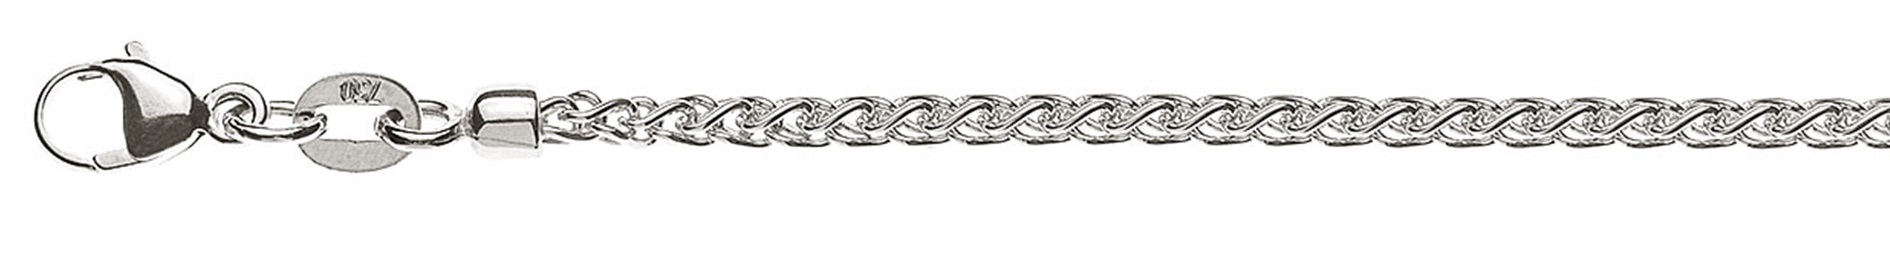 AURONOS Prestige Collier or blanc 18K chaîne câble 50cm 2.15mm